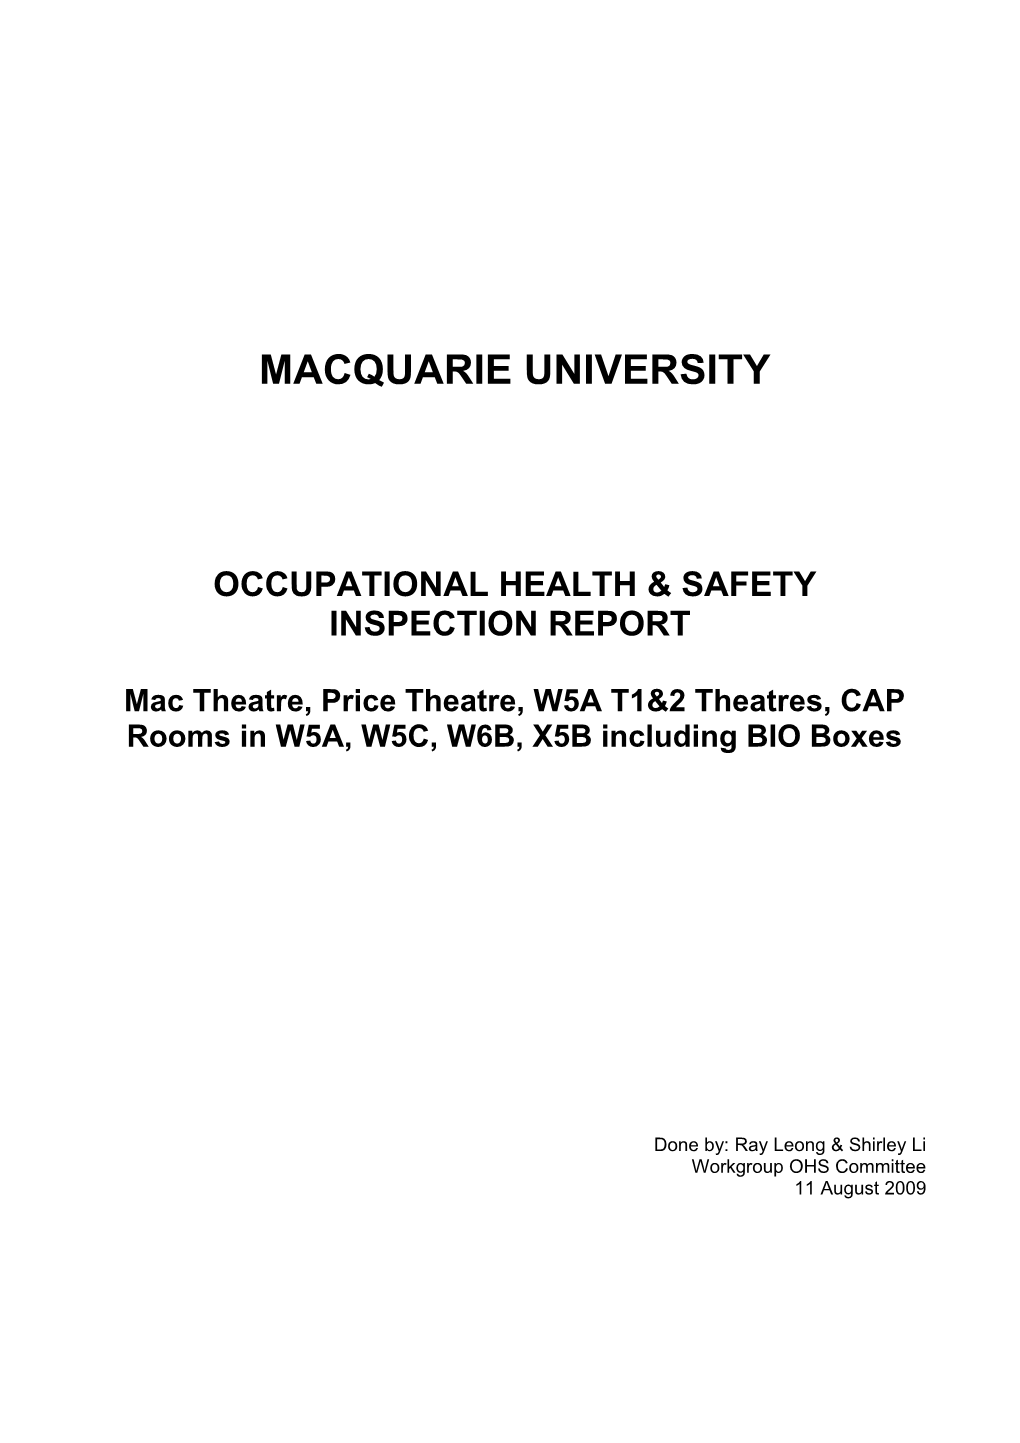 Macquarie University s1